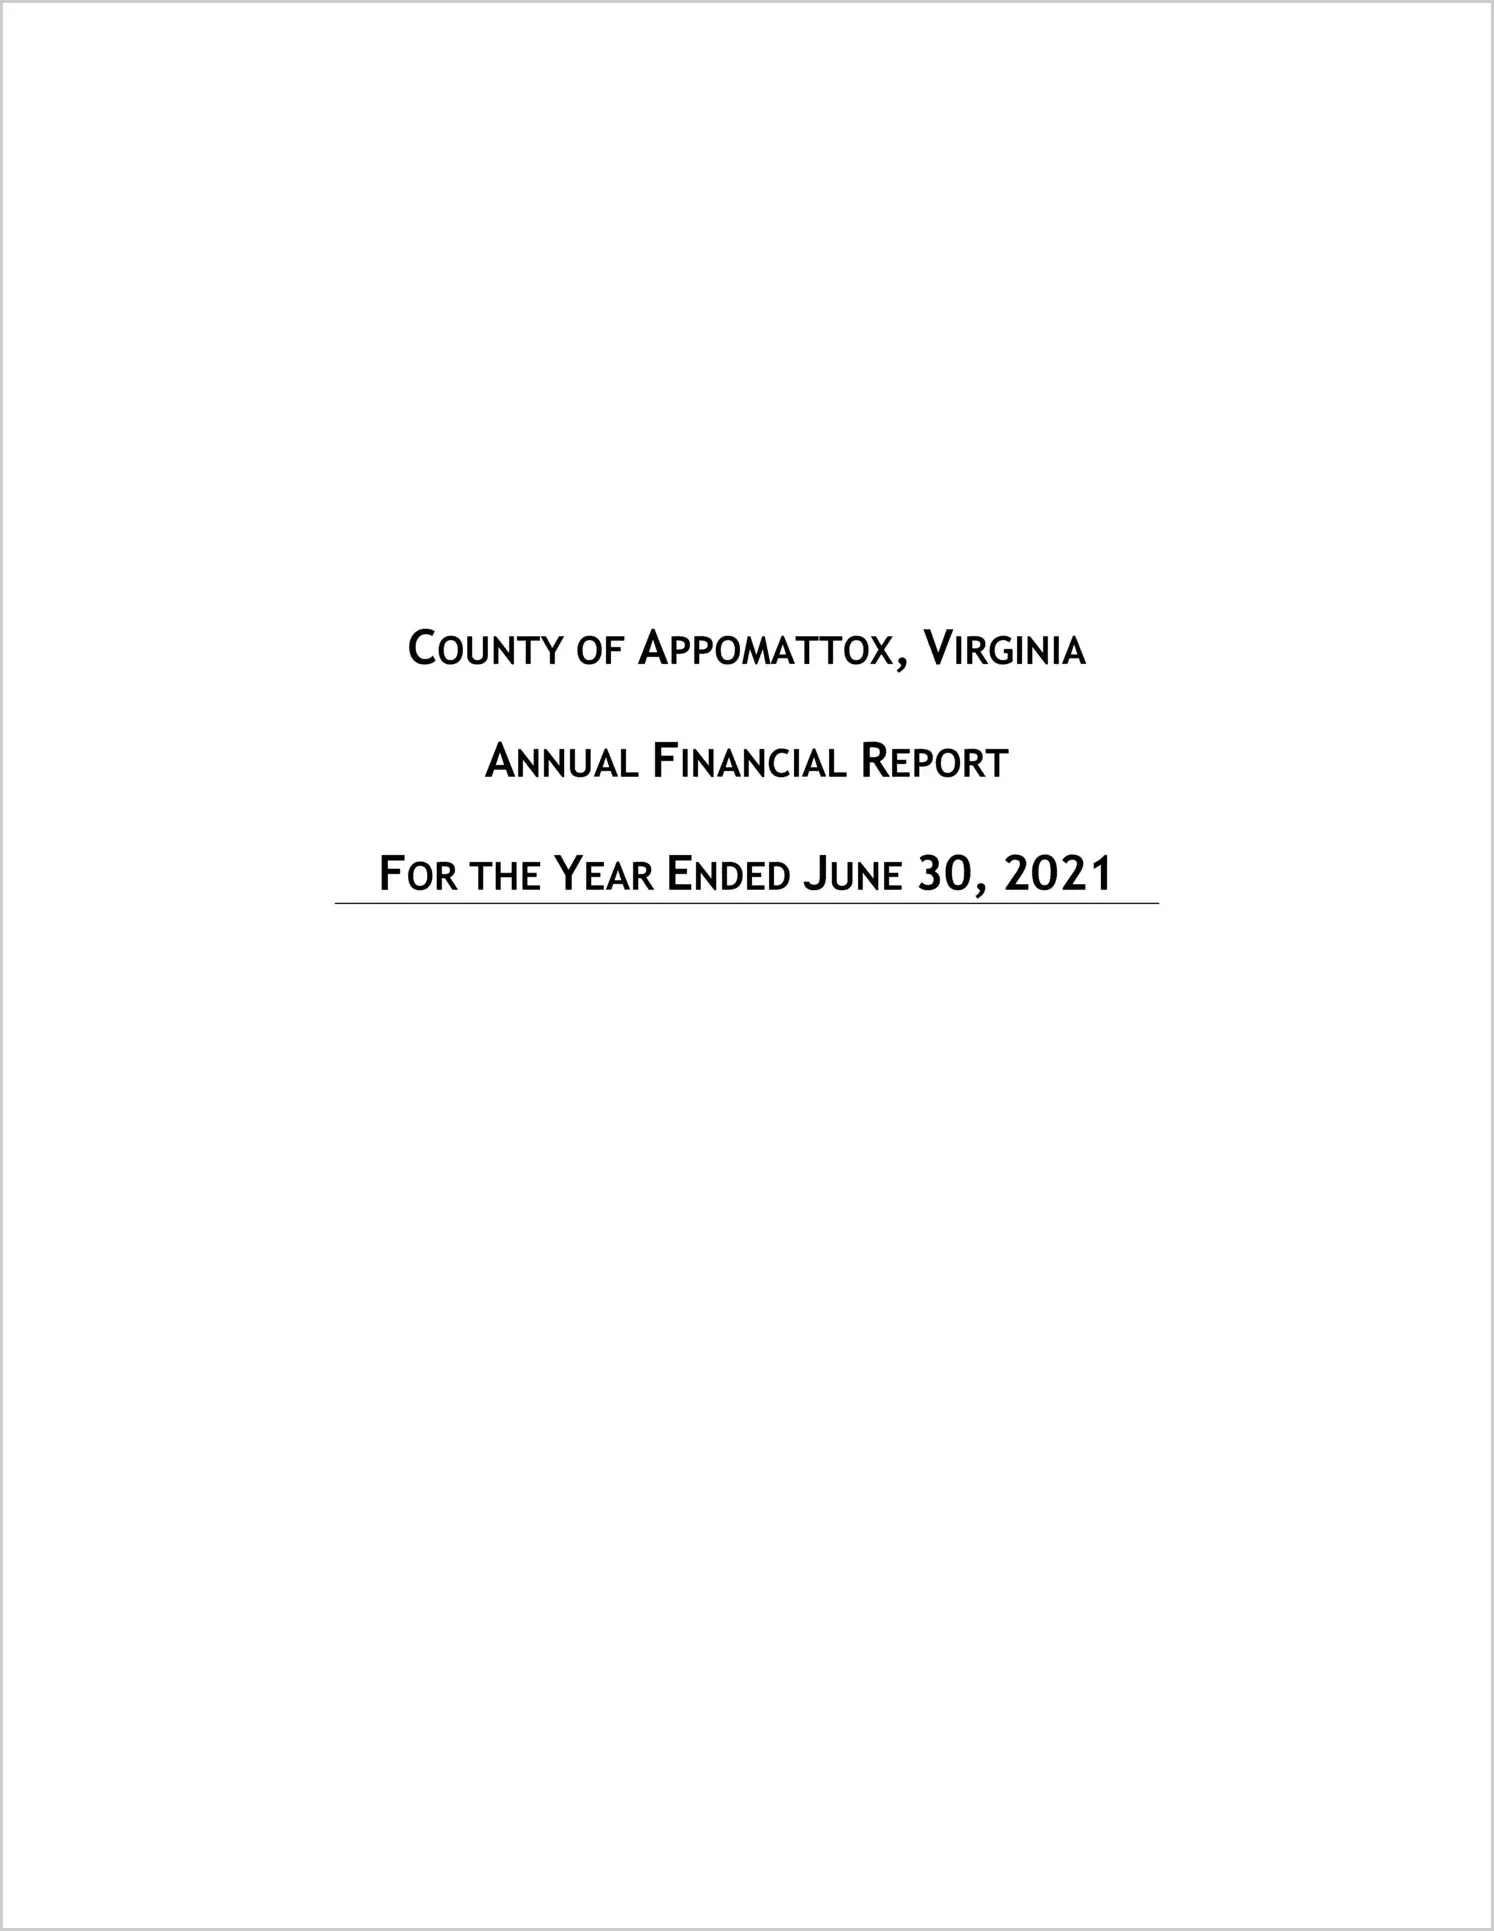 2021 Annual Financial Report for County of Appomattox